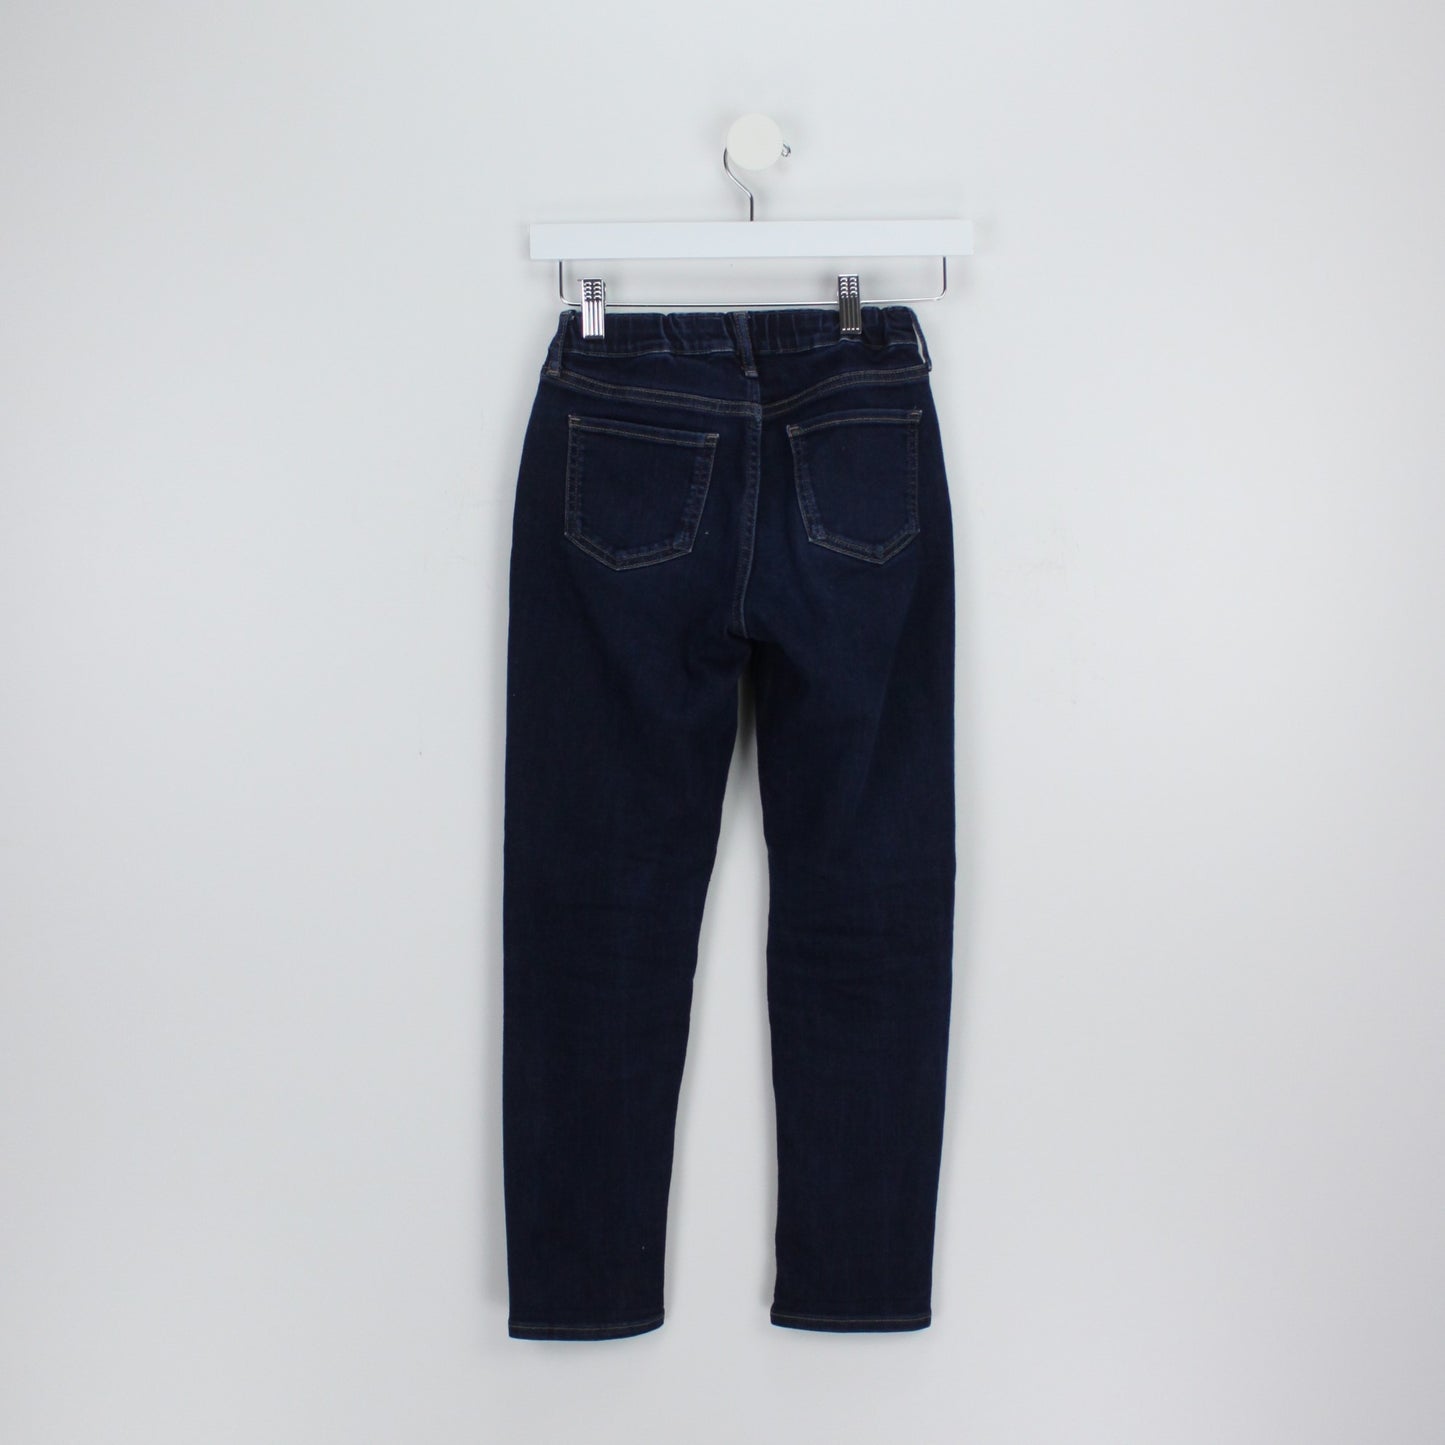 UNIQLO Pre-loved Jeans (140cm)